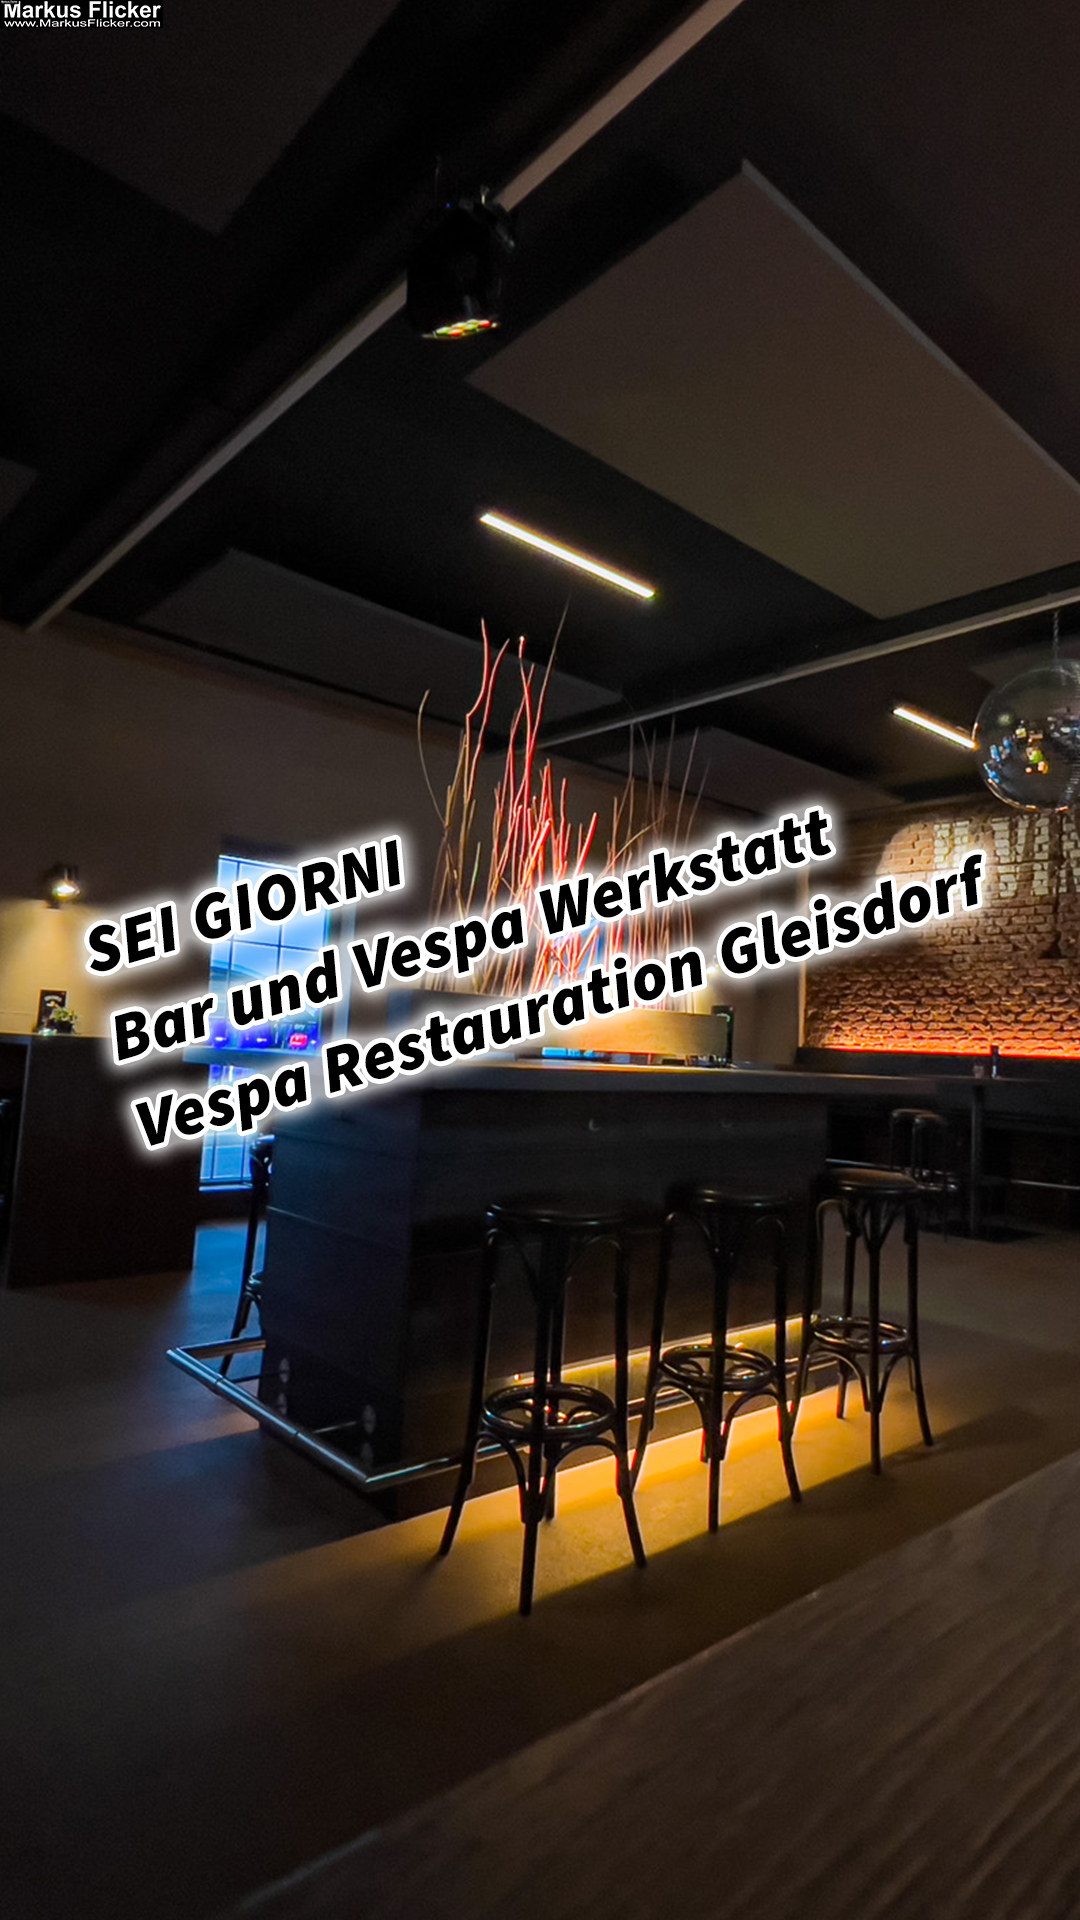 SEI GIORNI Bar und Vespa Werkstatt Vespa Restauration Gleisdorf